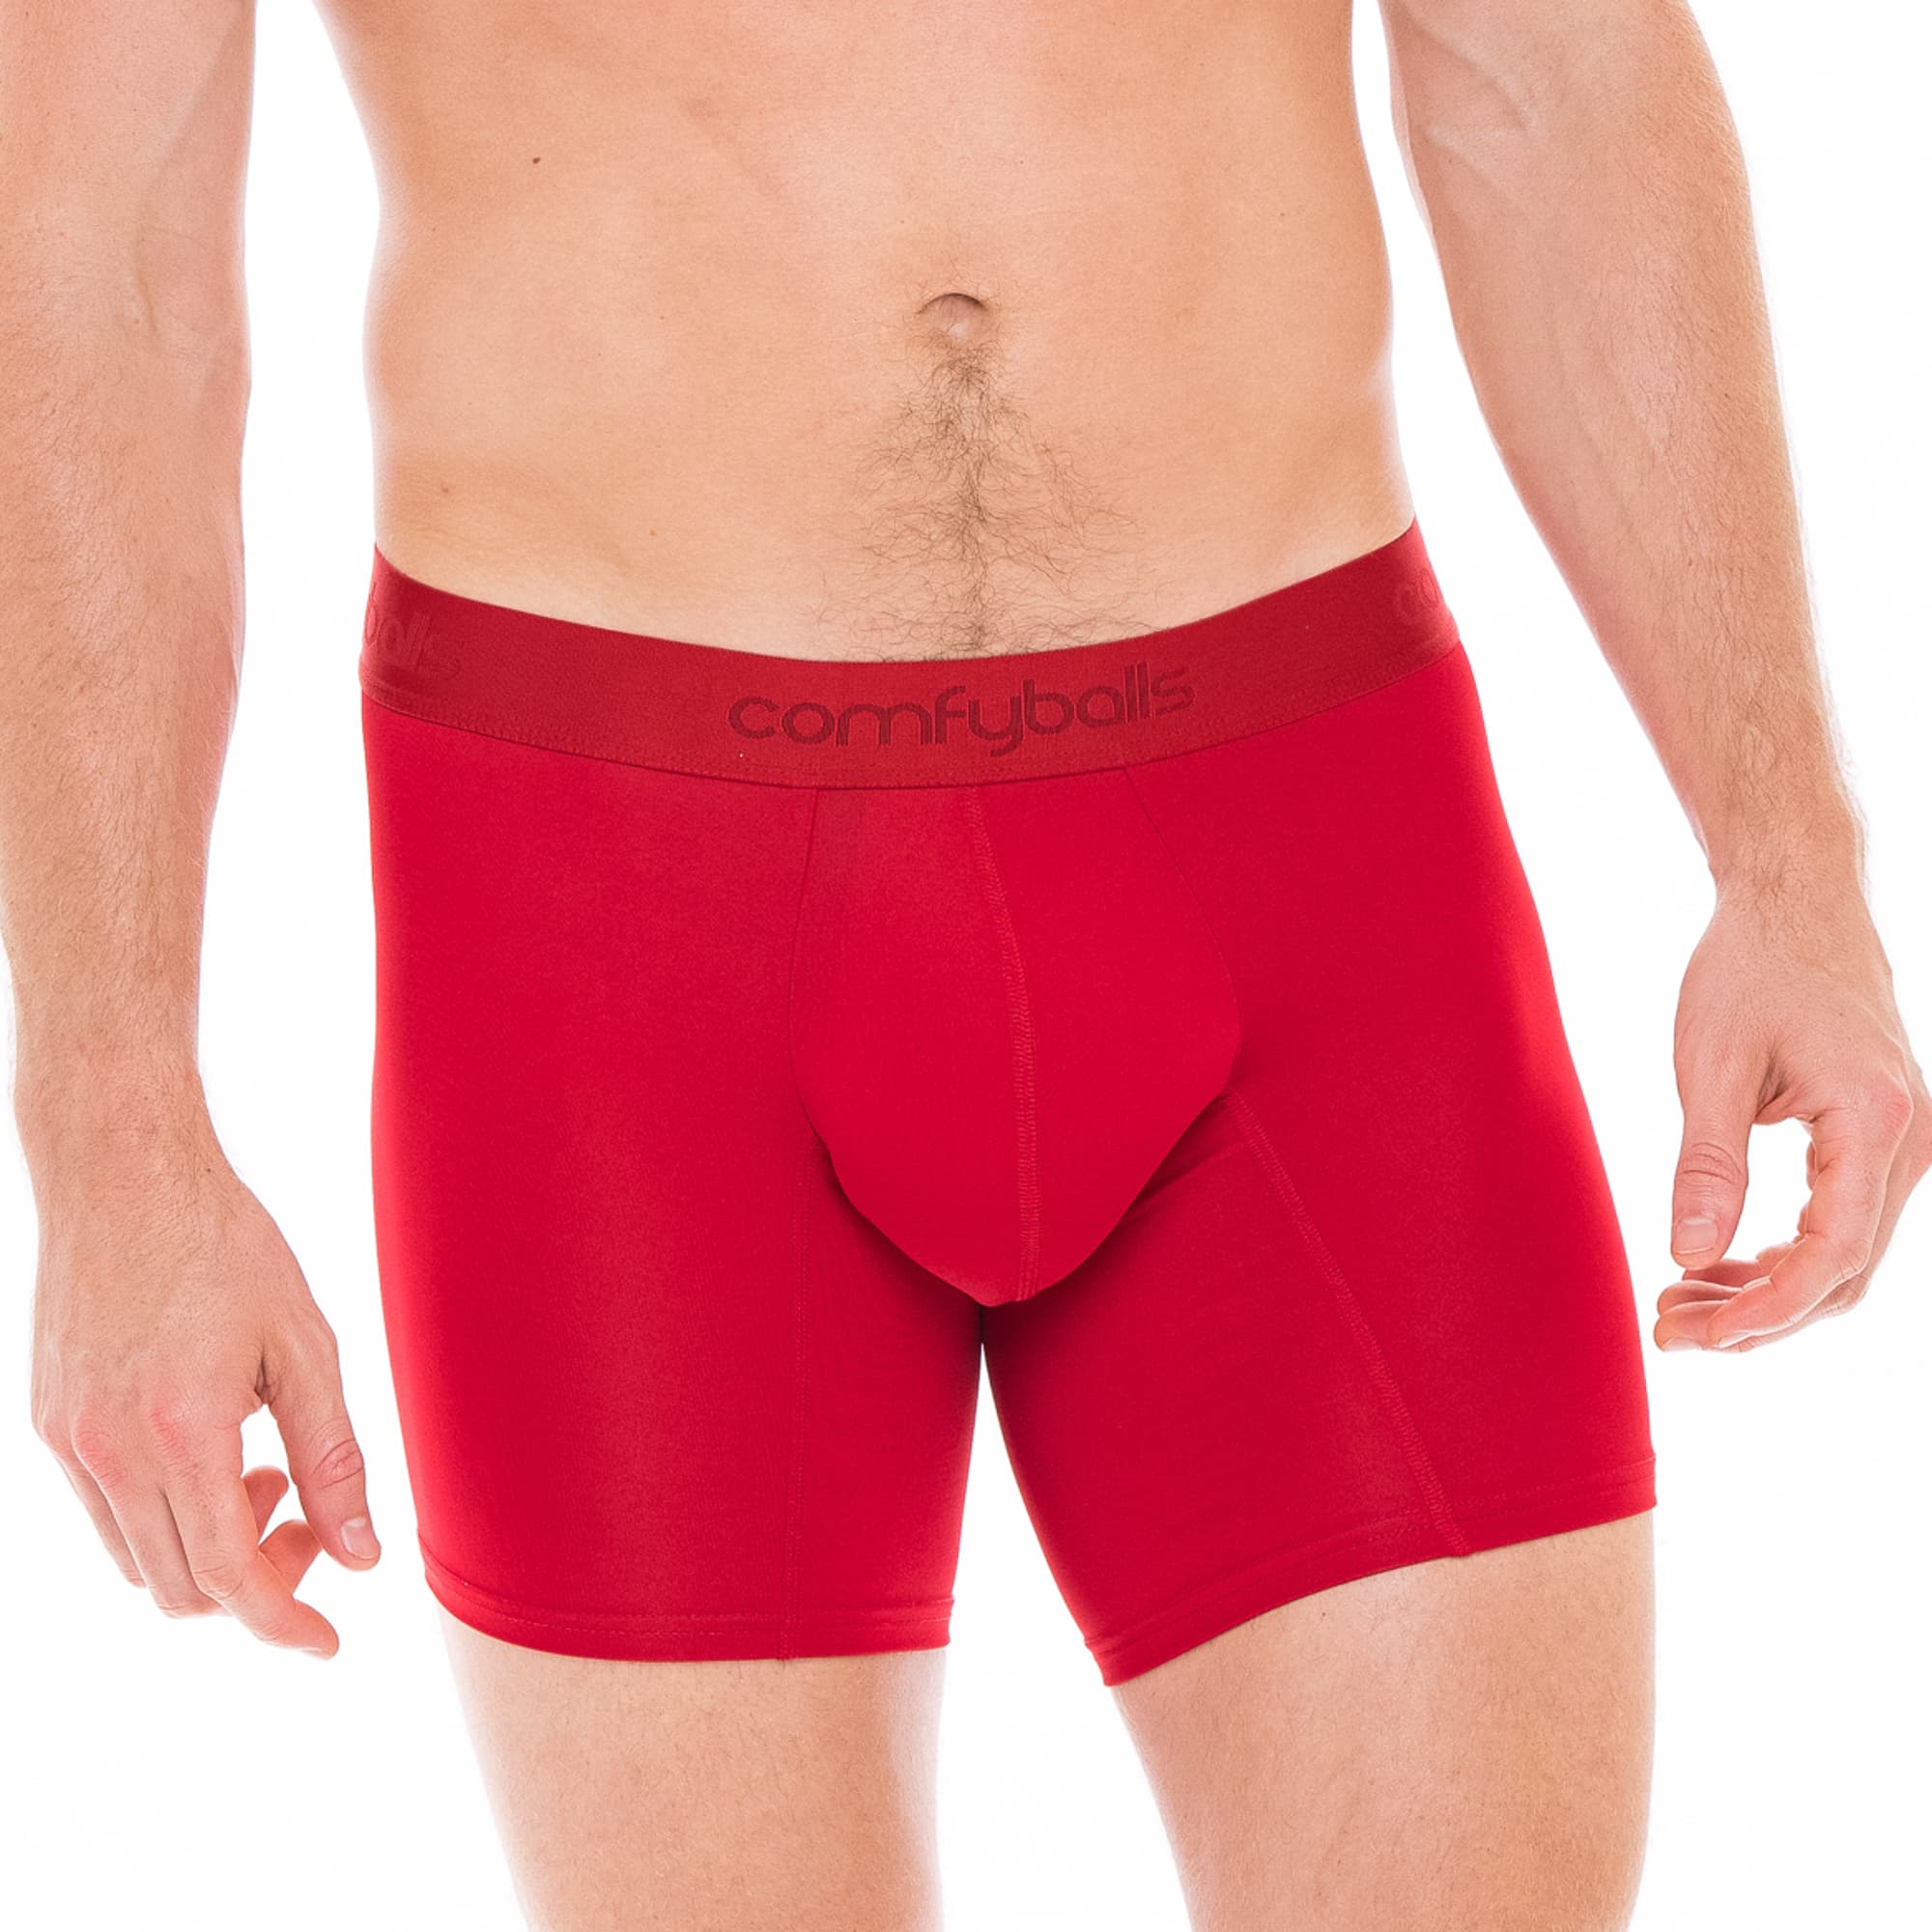 Pevtufa Play Game Underwear For Men Comfy Cozy Holiday Boxer